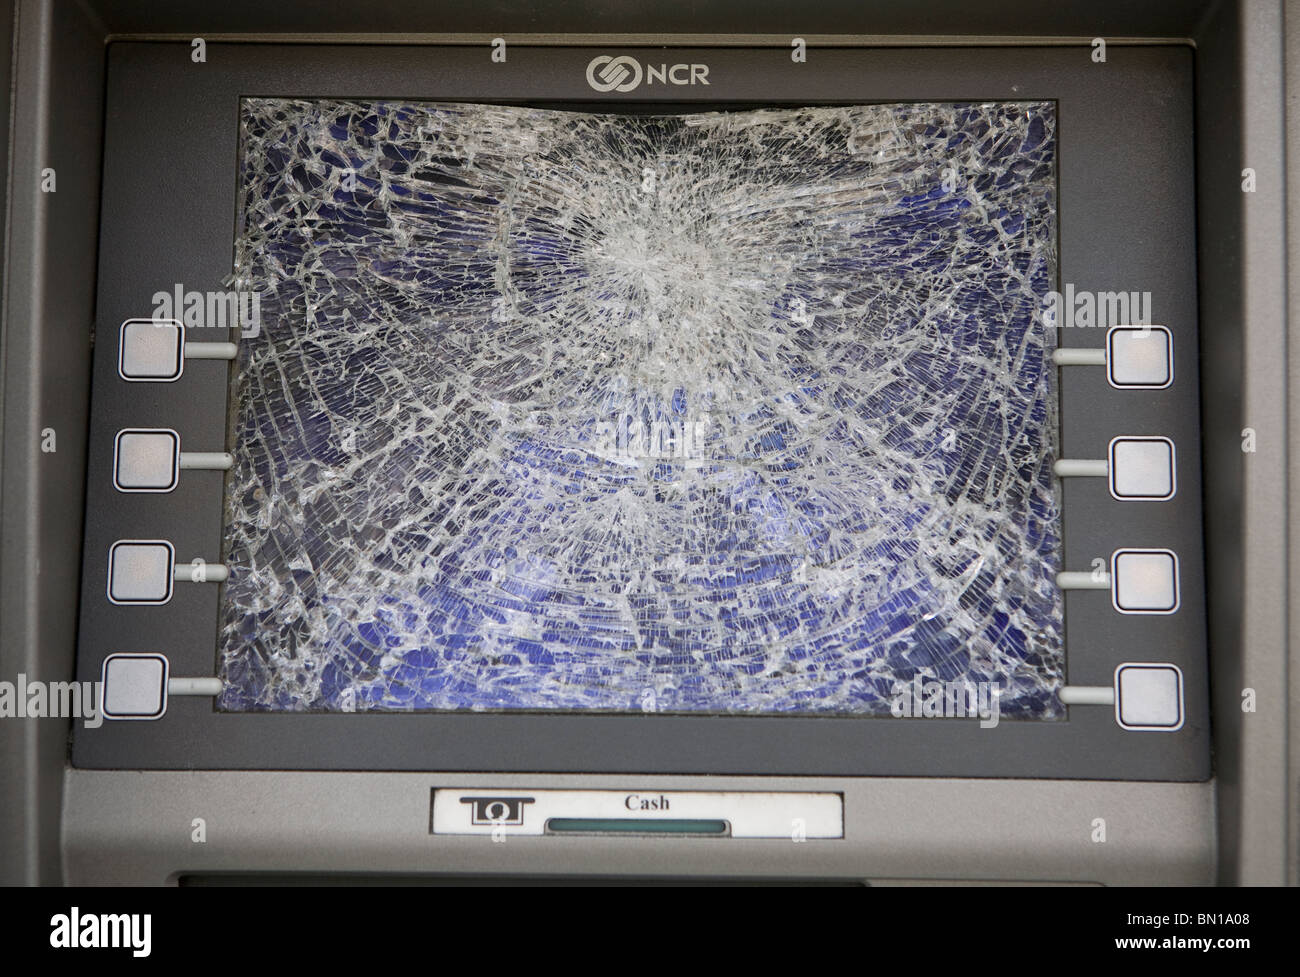 vandalized atm cash machine in London Stock Photo